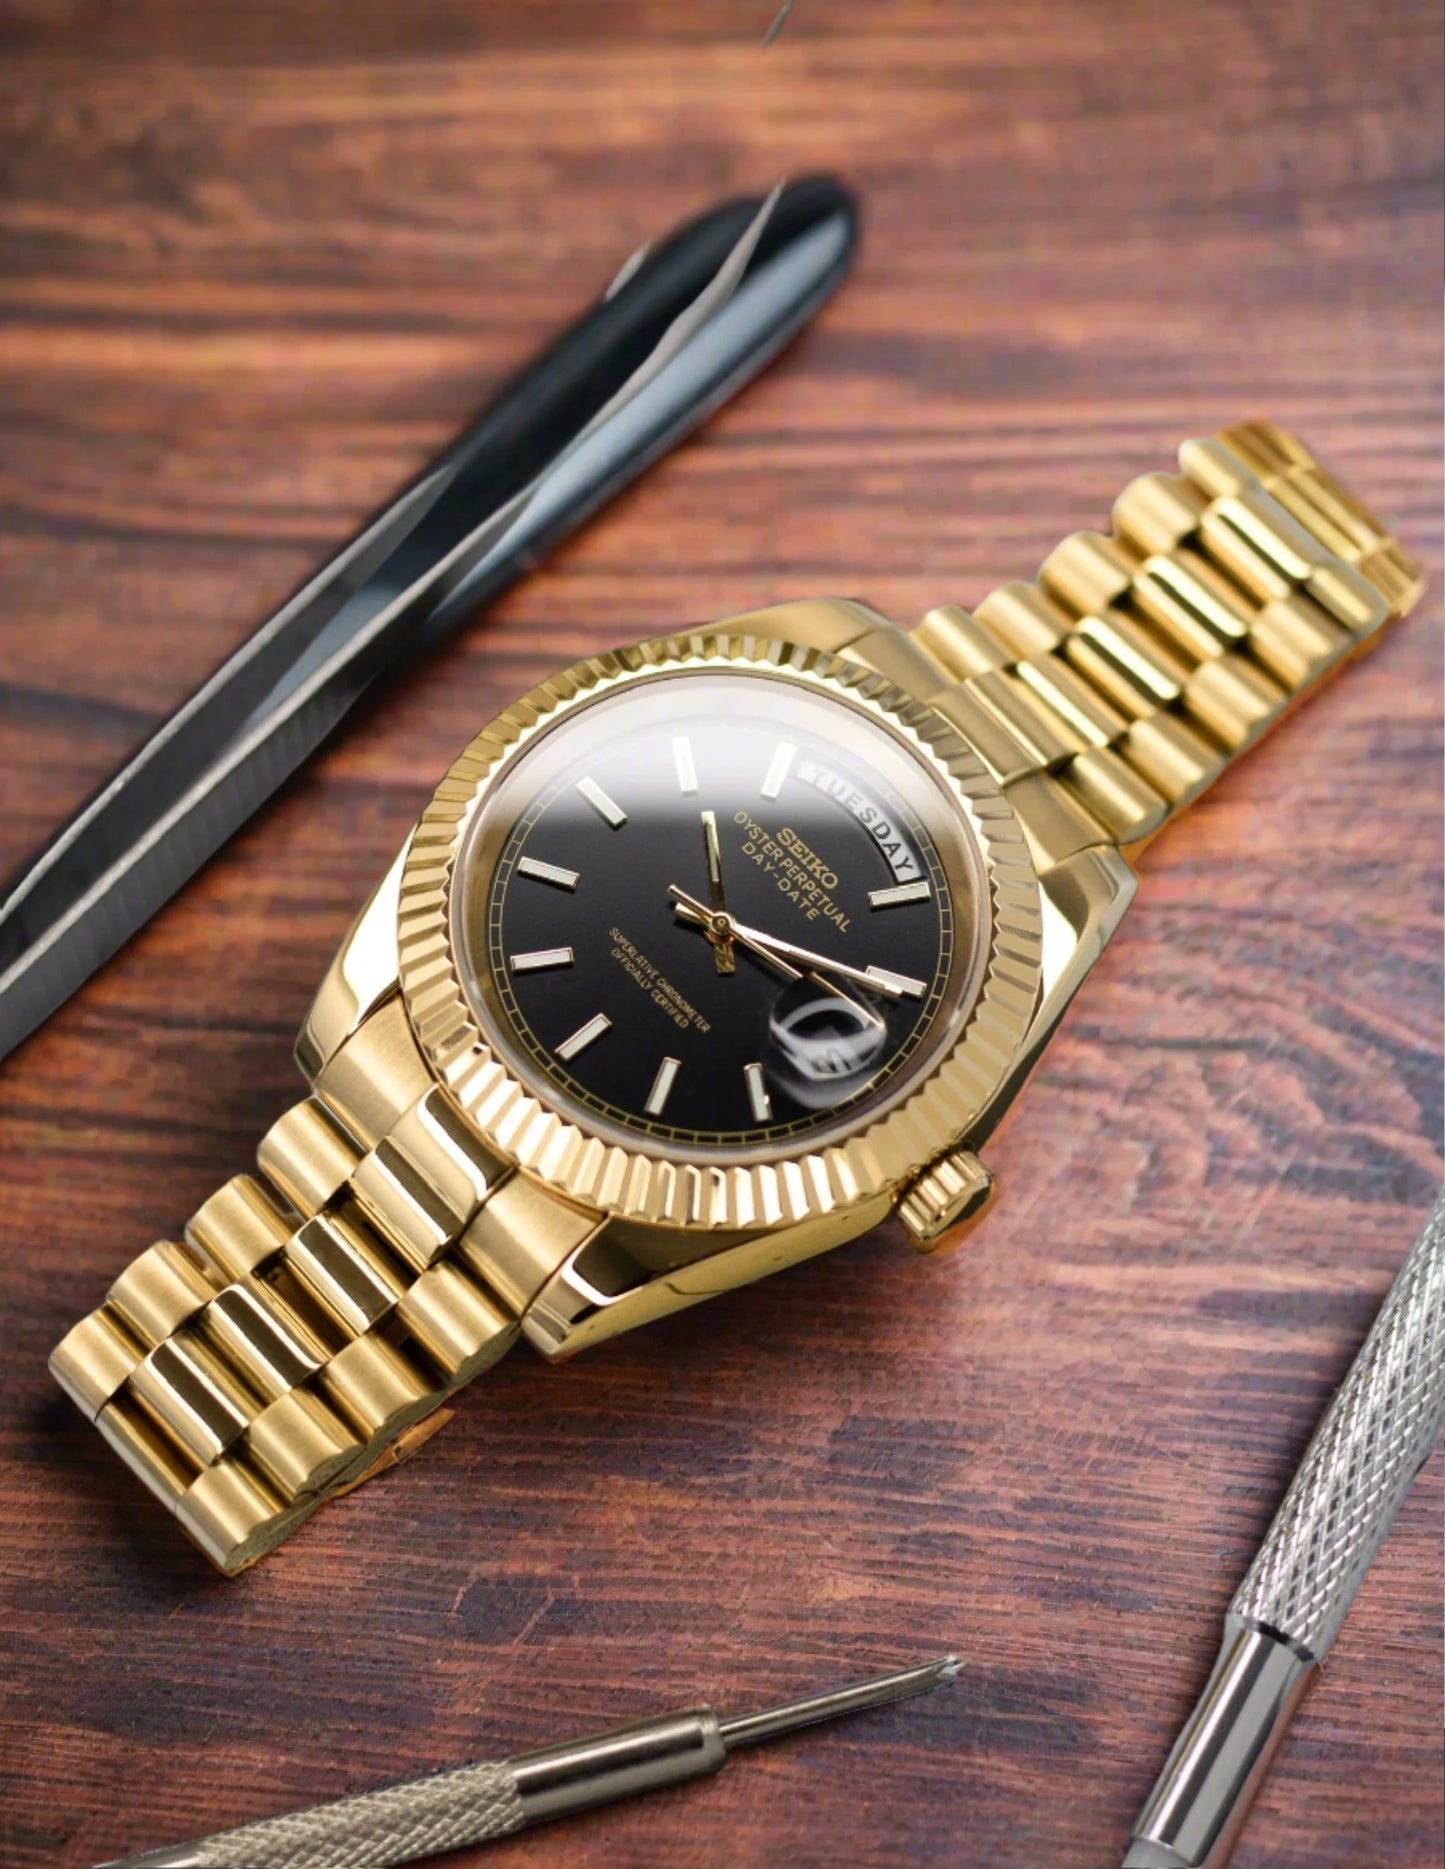 Seiko mod Black gold 39mm Day Date automatic watch